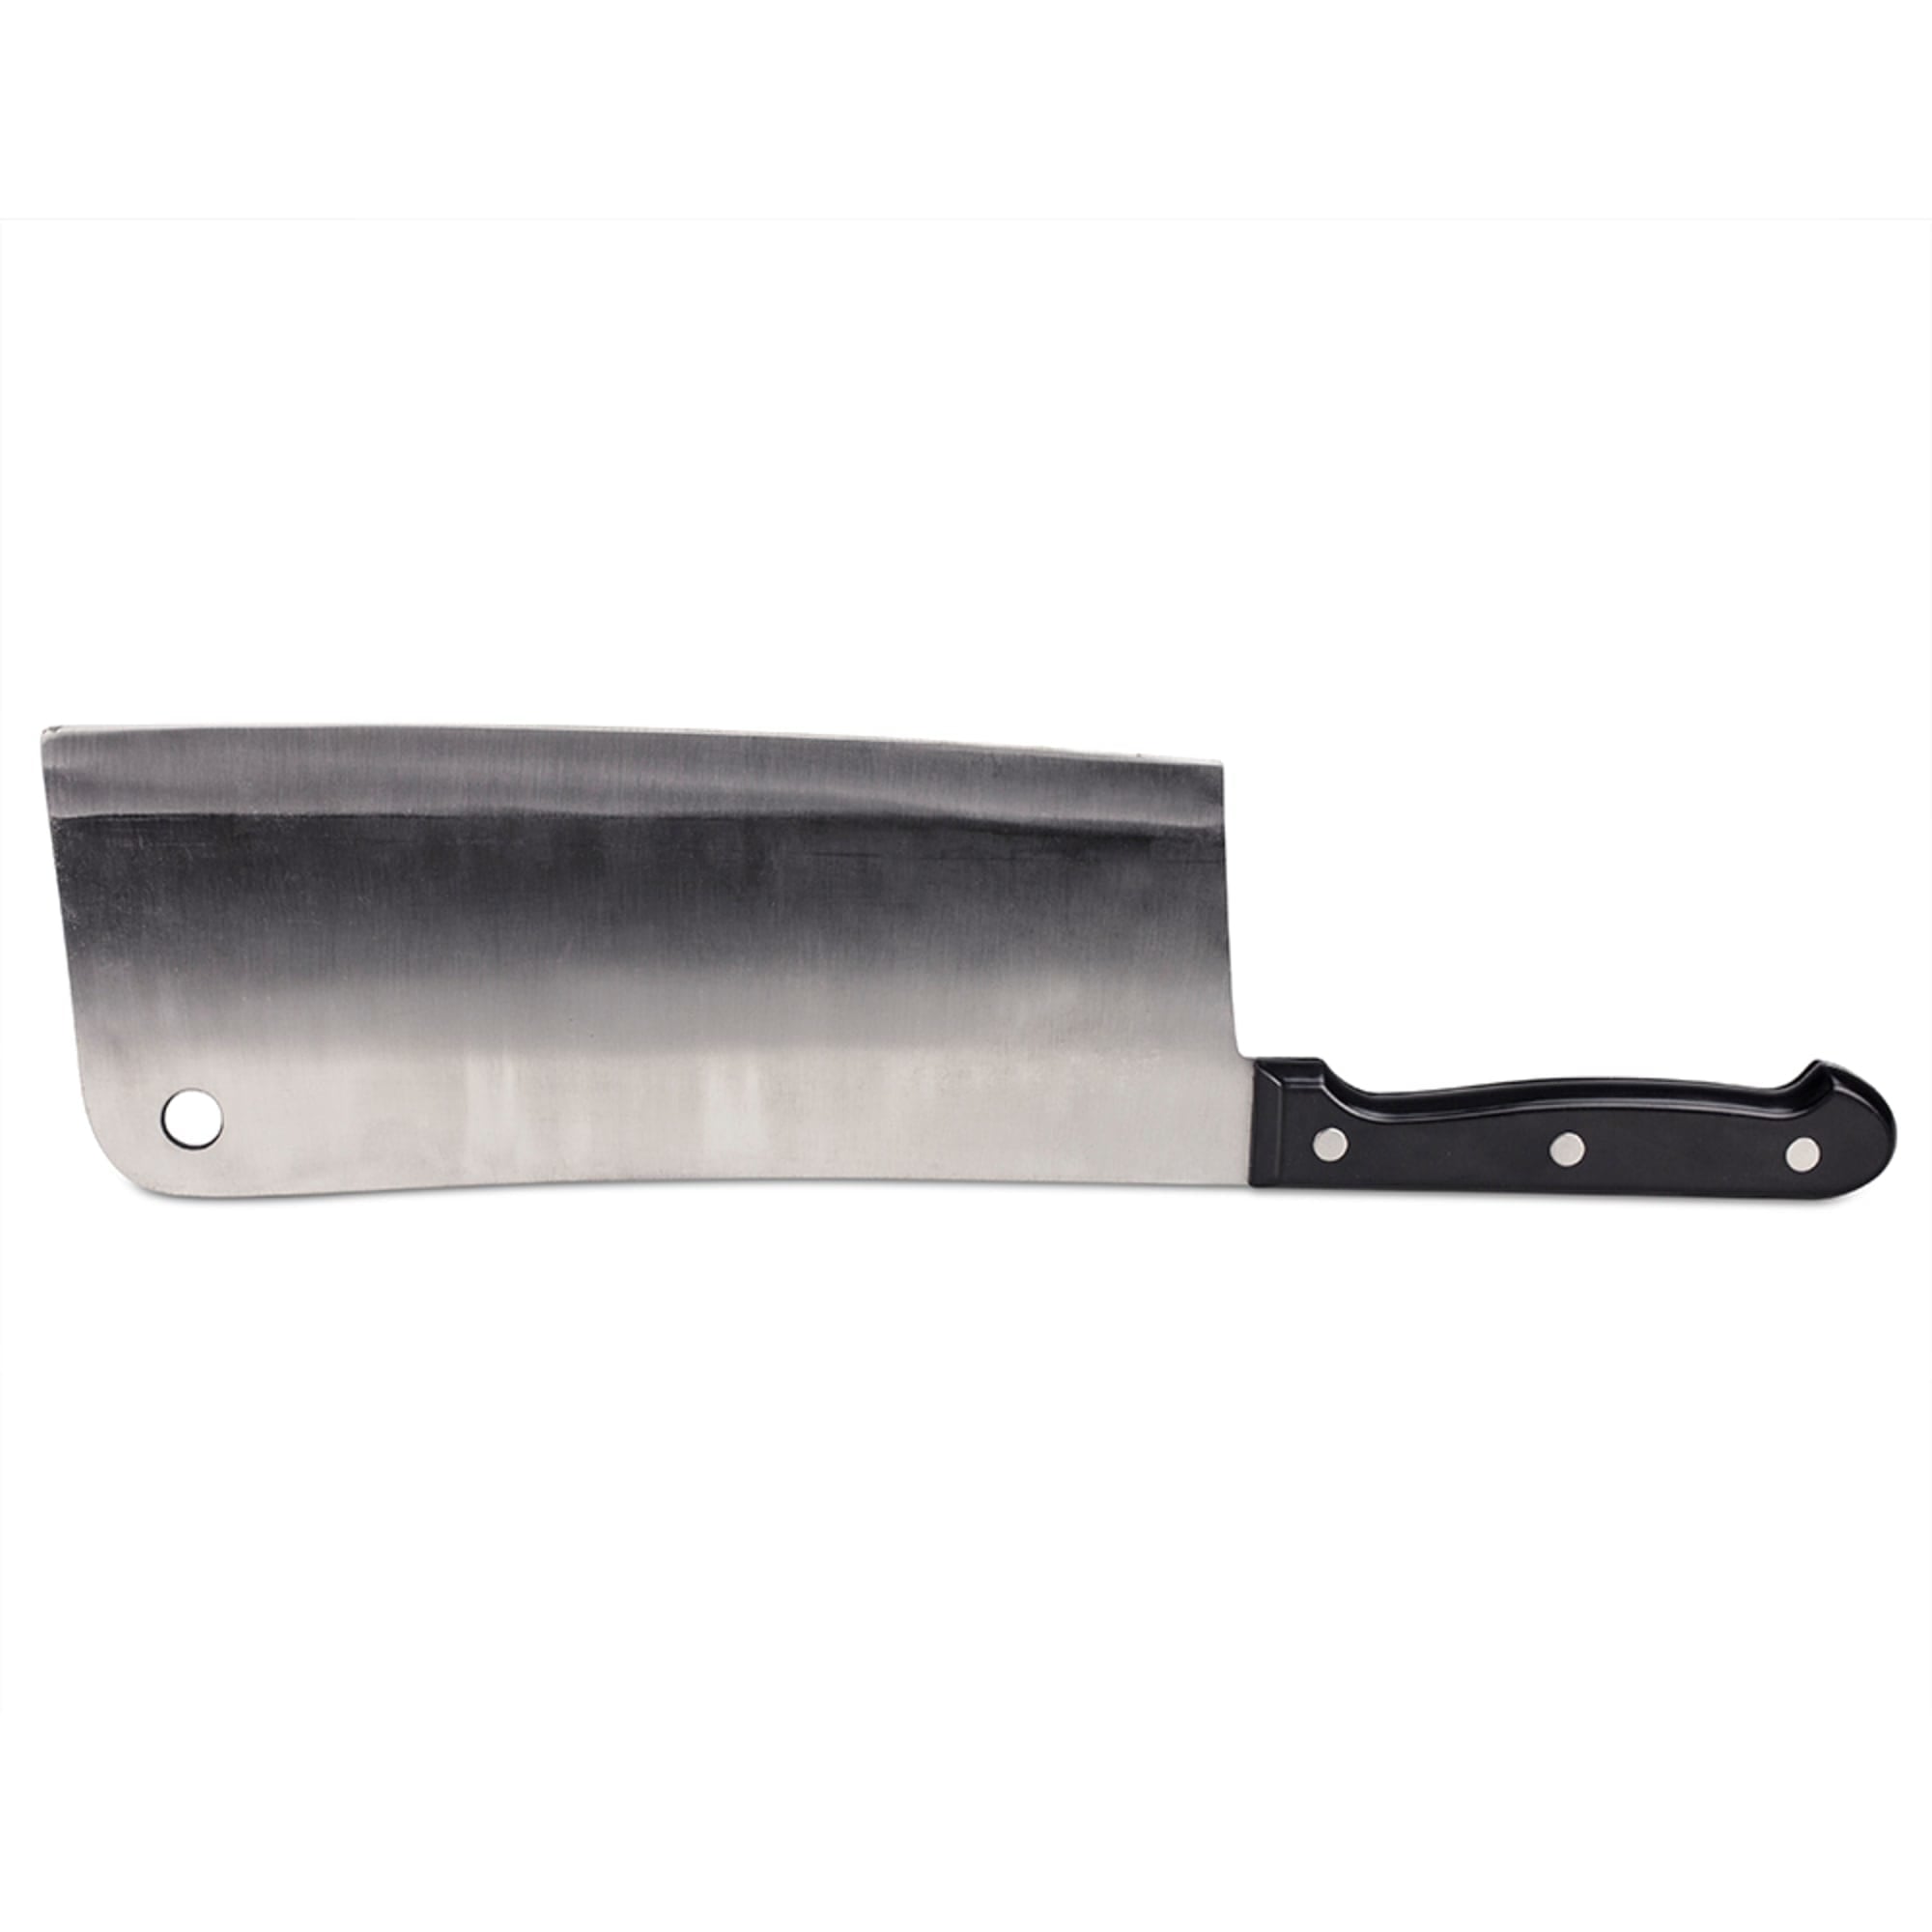 Home Basics 3 Stage Precision Edge Knife Sharpener, Black, FOOD PREP